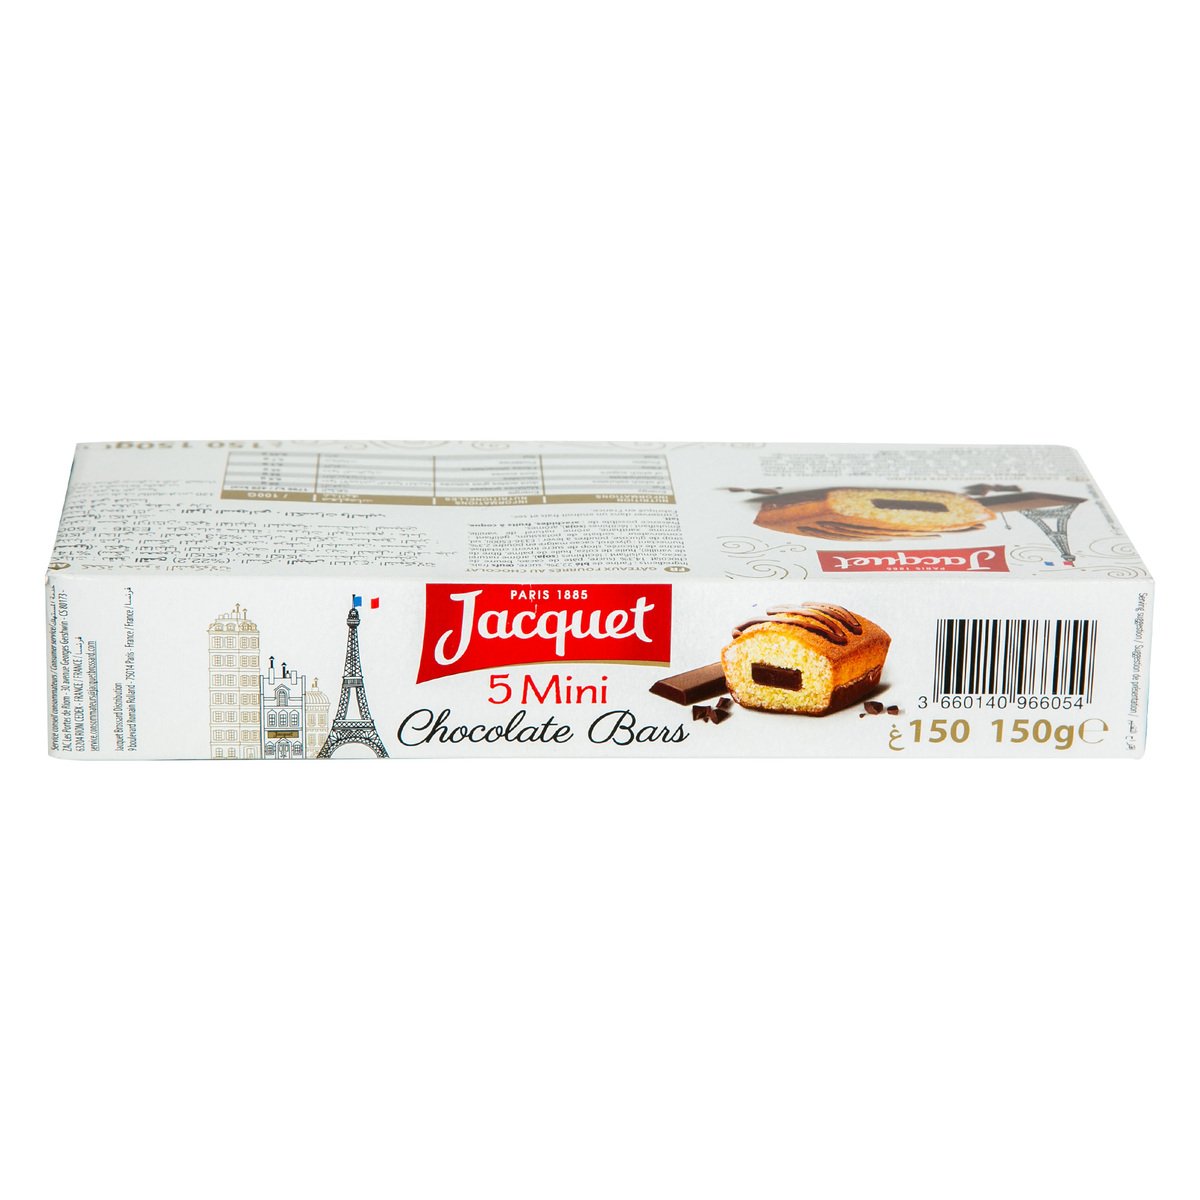 Jacquet 5 Mini Crunchy Chocolate Bars 150 g